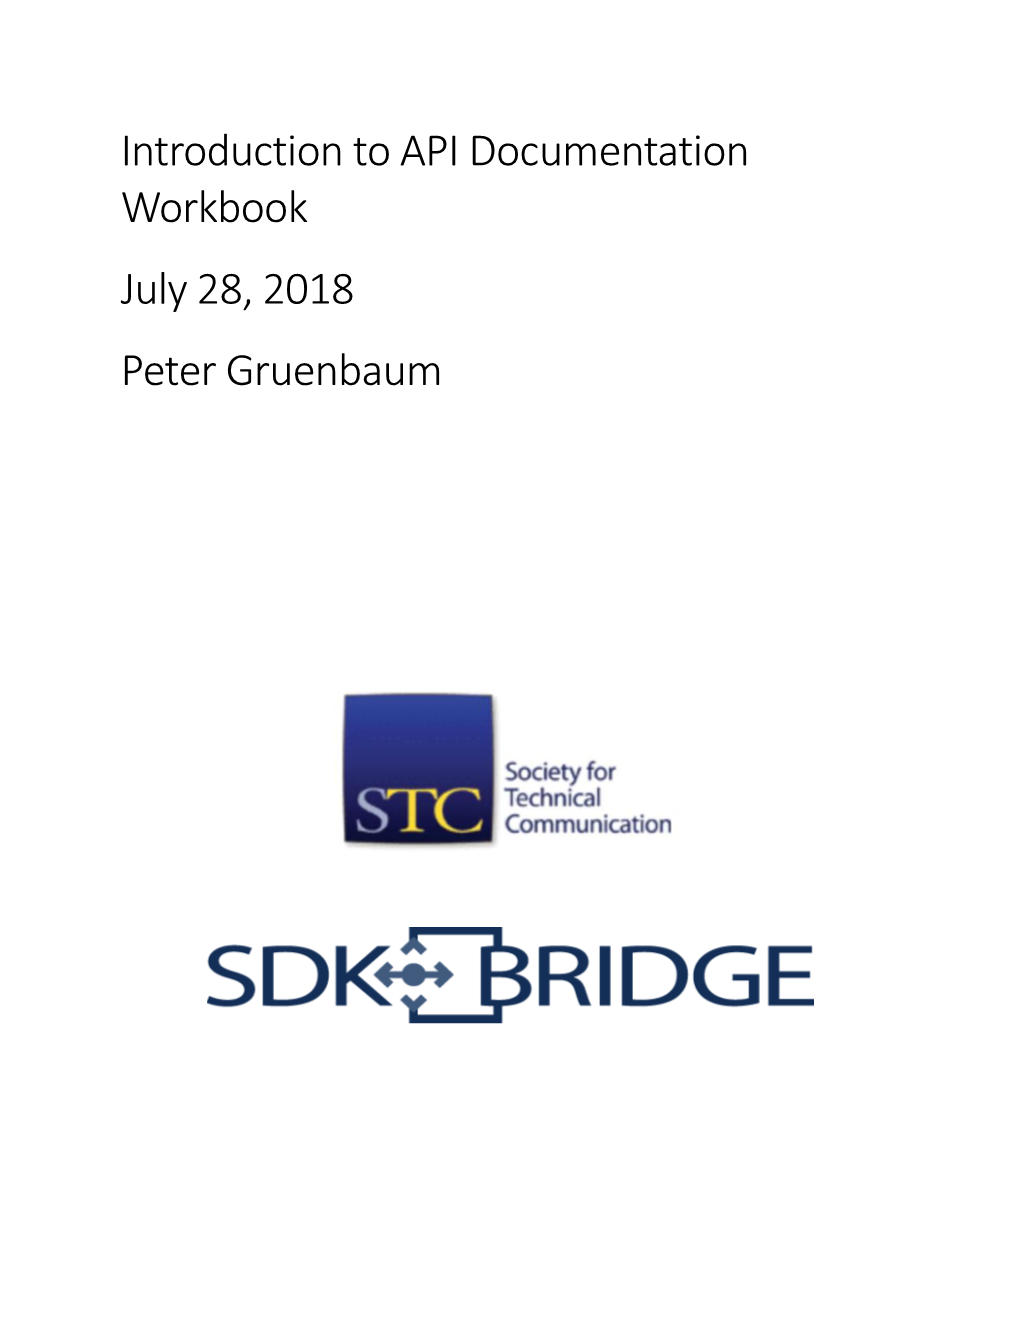 Introduction to API Documentation Workbook July 28, 2018 Peter Gruenbaum